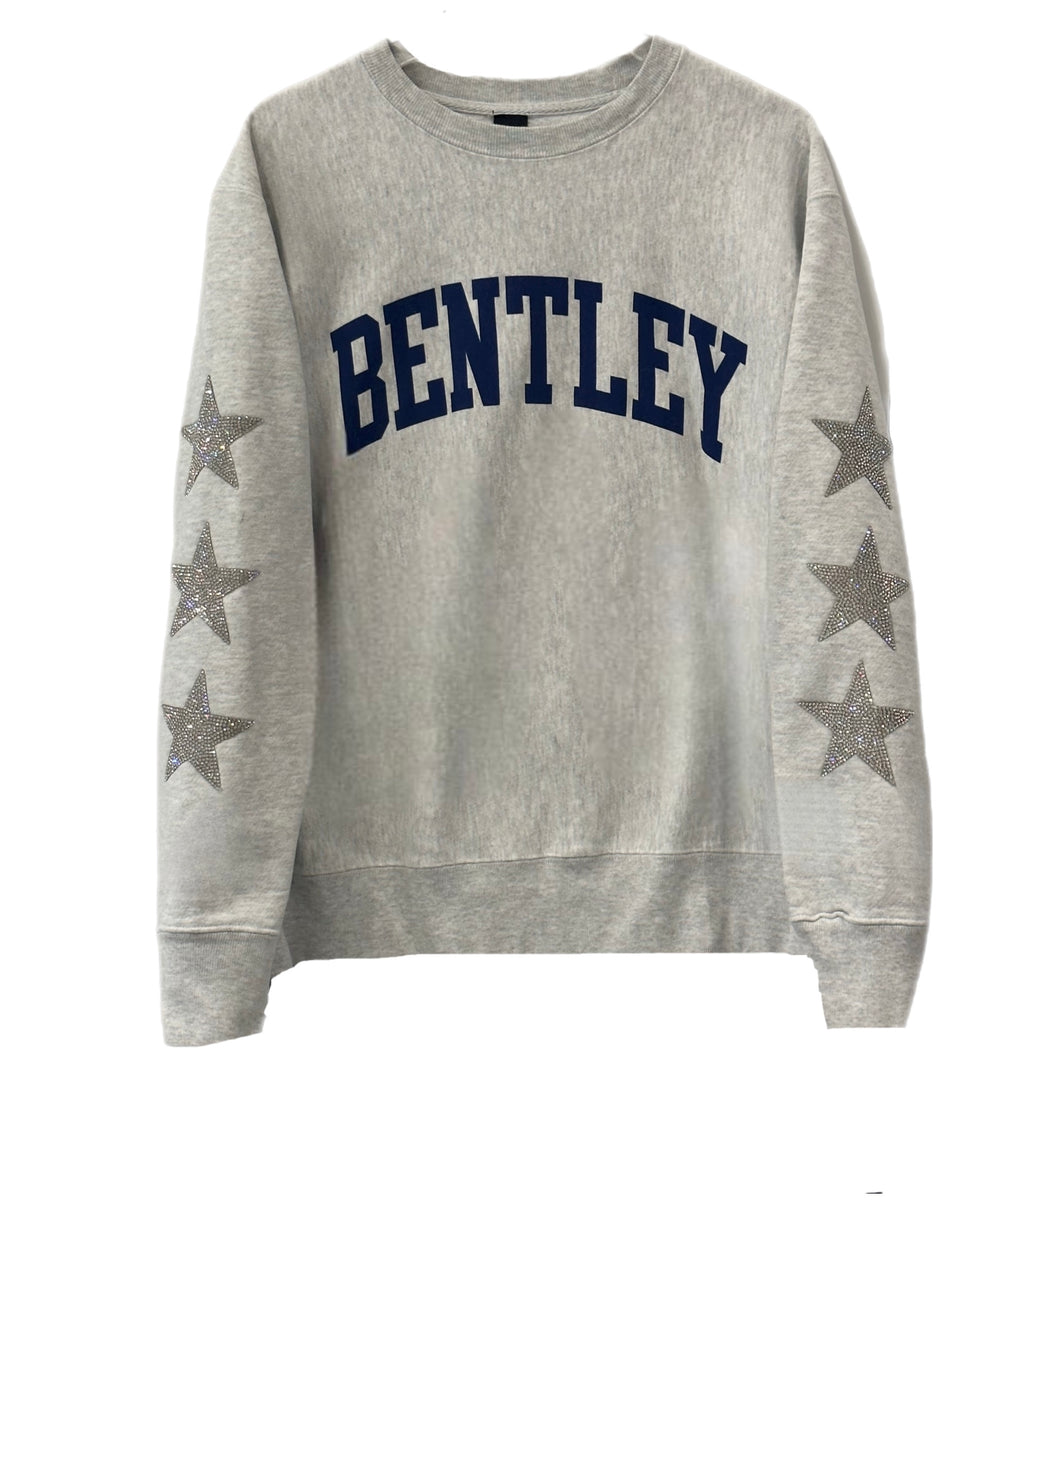 Bentley University, One of a KIND Vintage Sweatshirt with Three Crystal Star Design